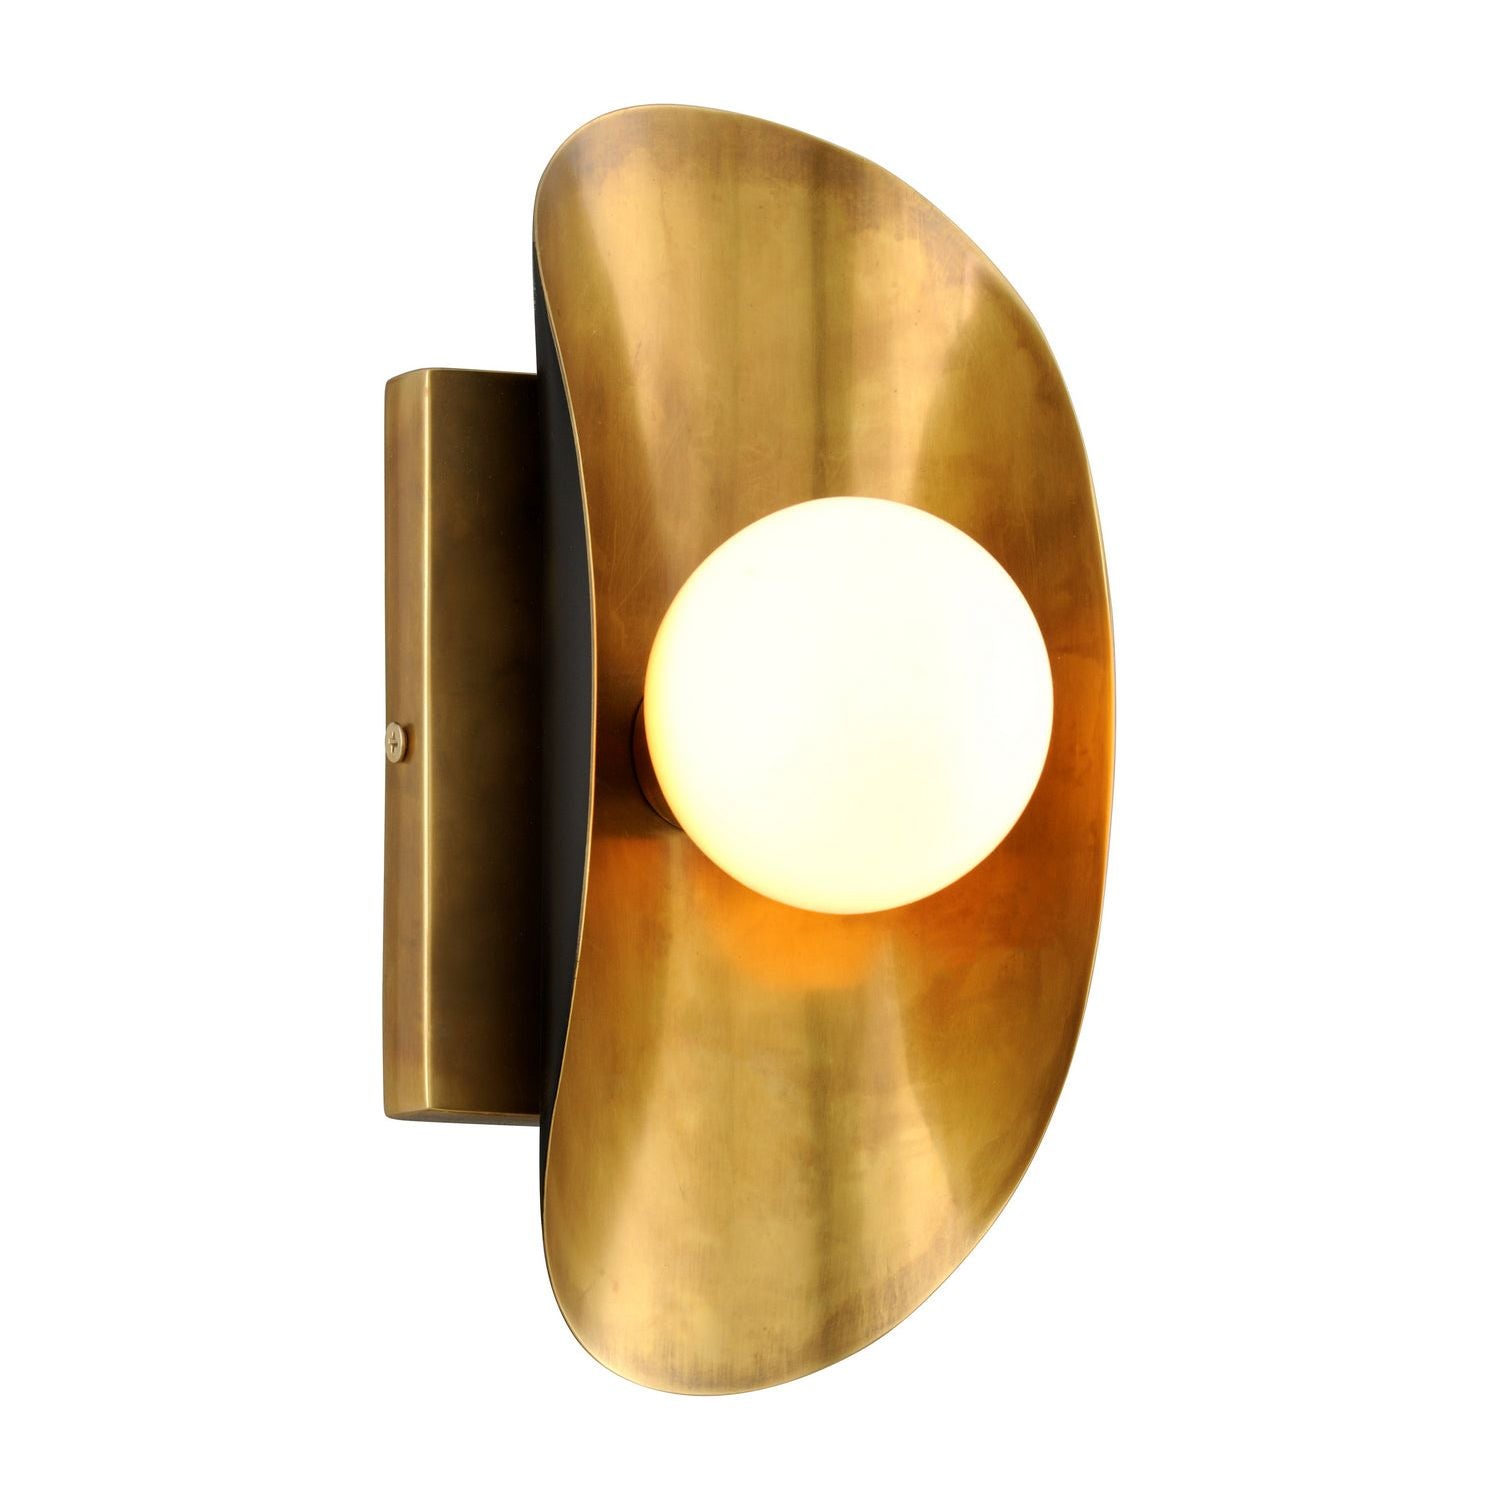 Corbett Lighting - 271-11-VB/BBR - One Light Wall Sconce - Hopper - Vintage Brass Bronze Accents